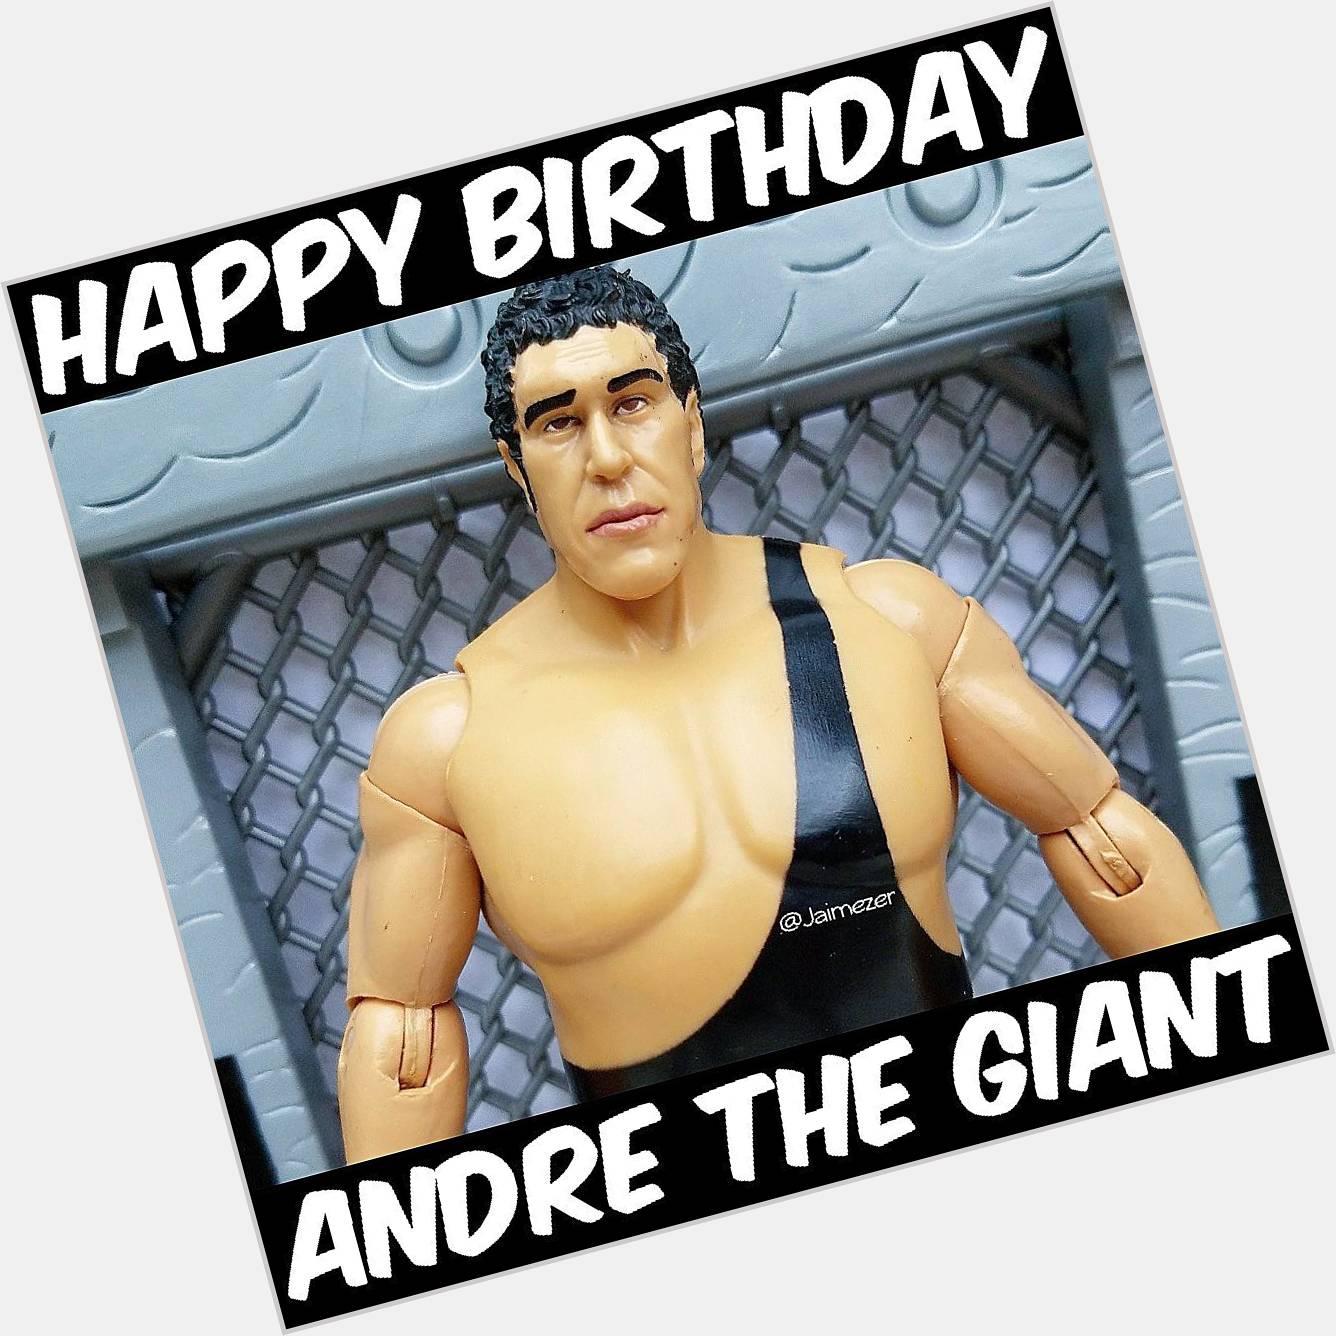 Happy Birthday to Andre the Giant!
RIP (May 19, 1946 - January 27, 1993) 